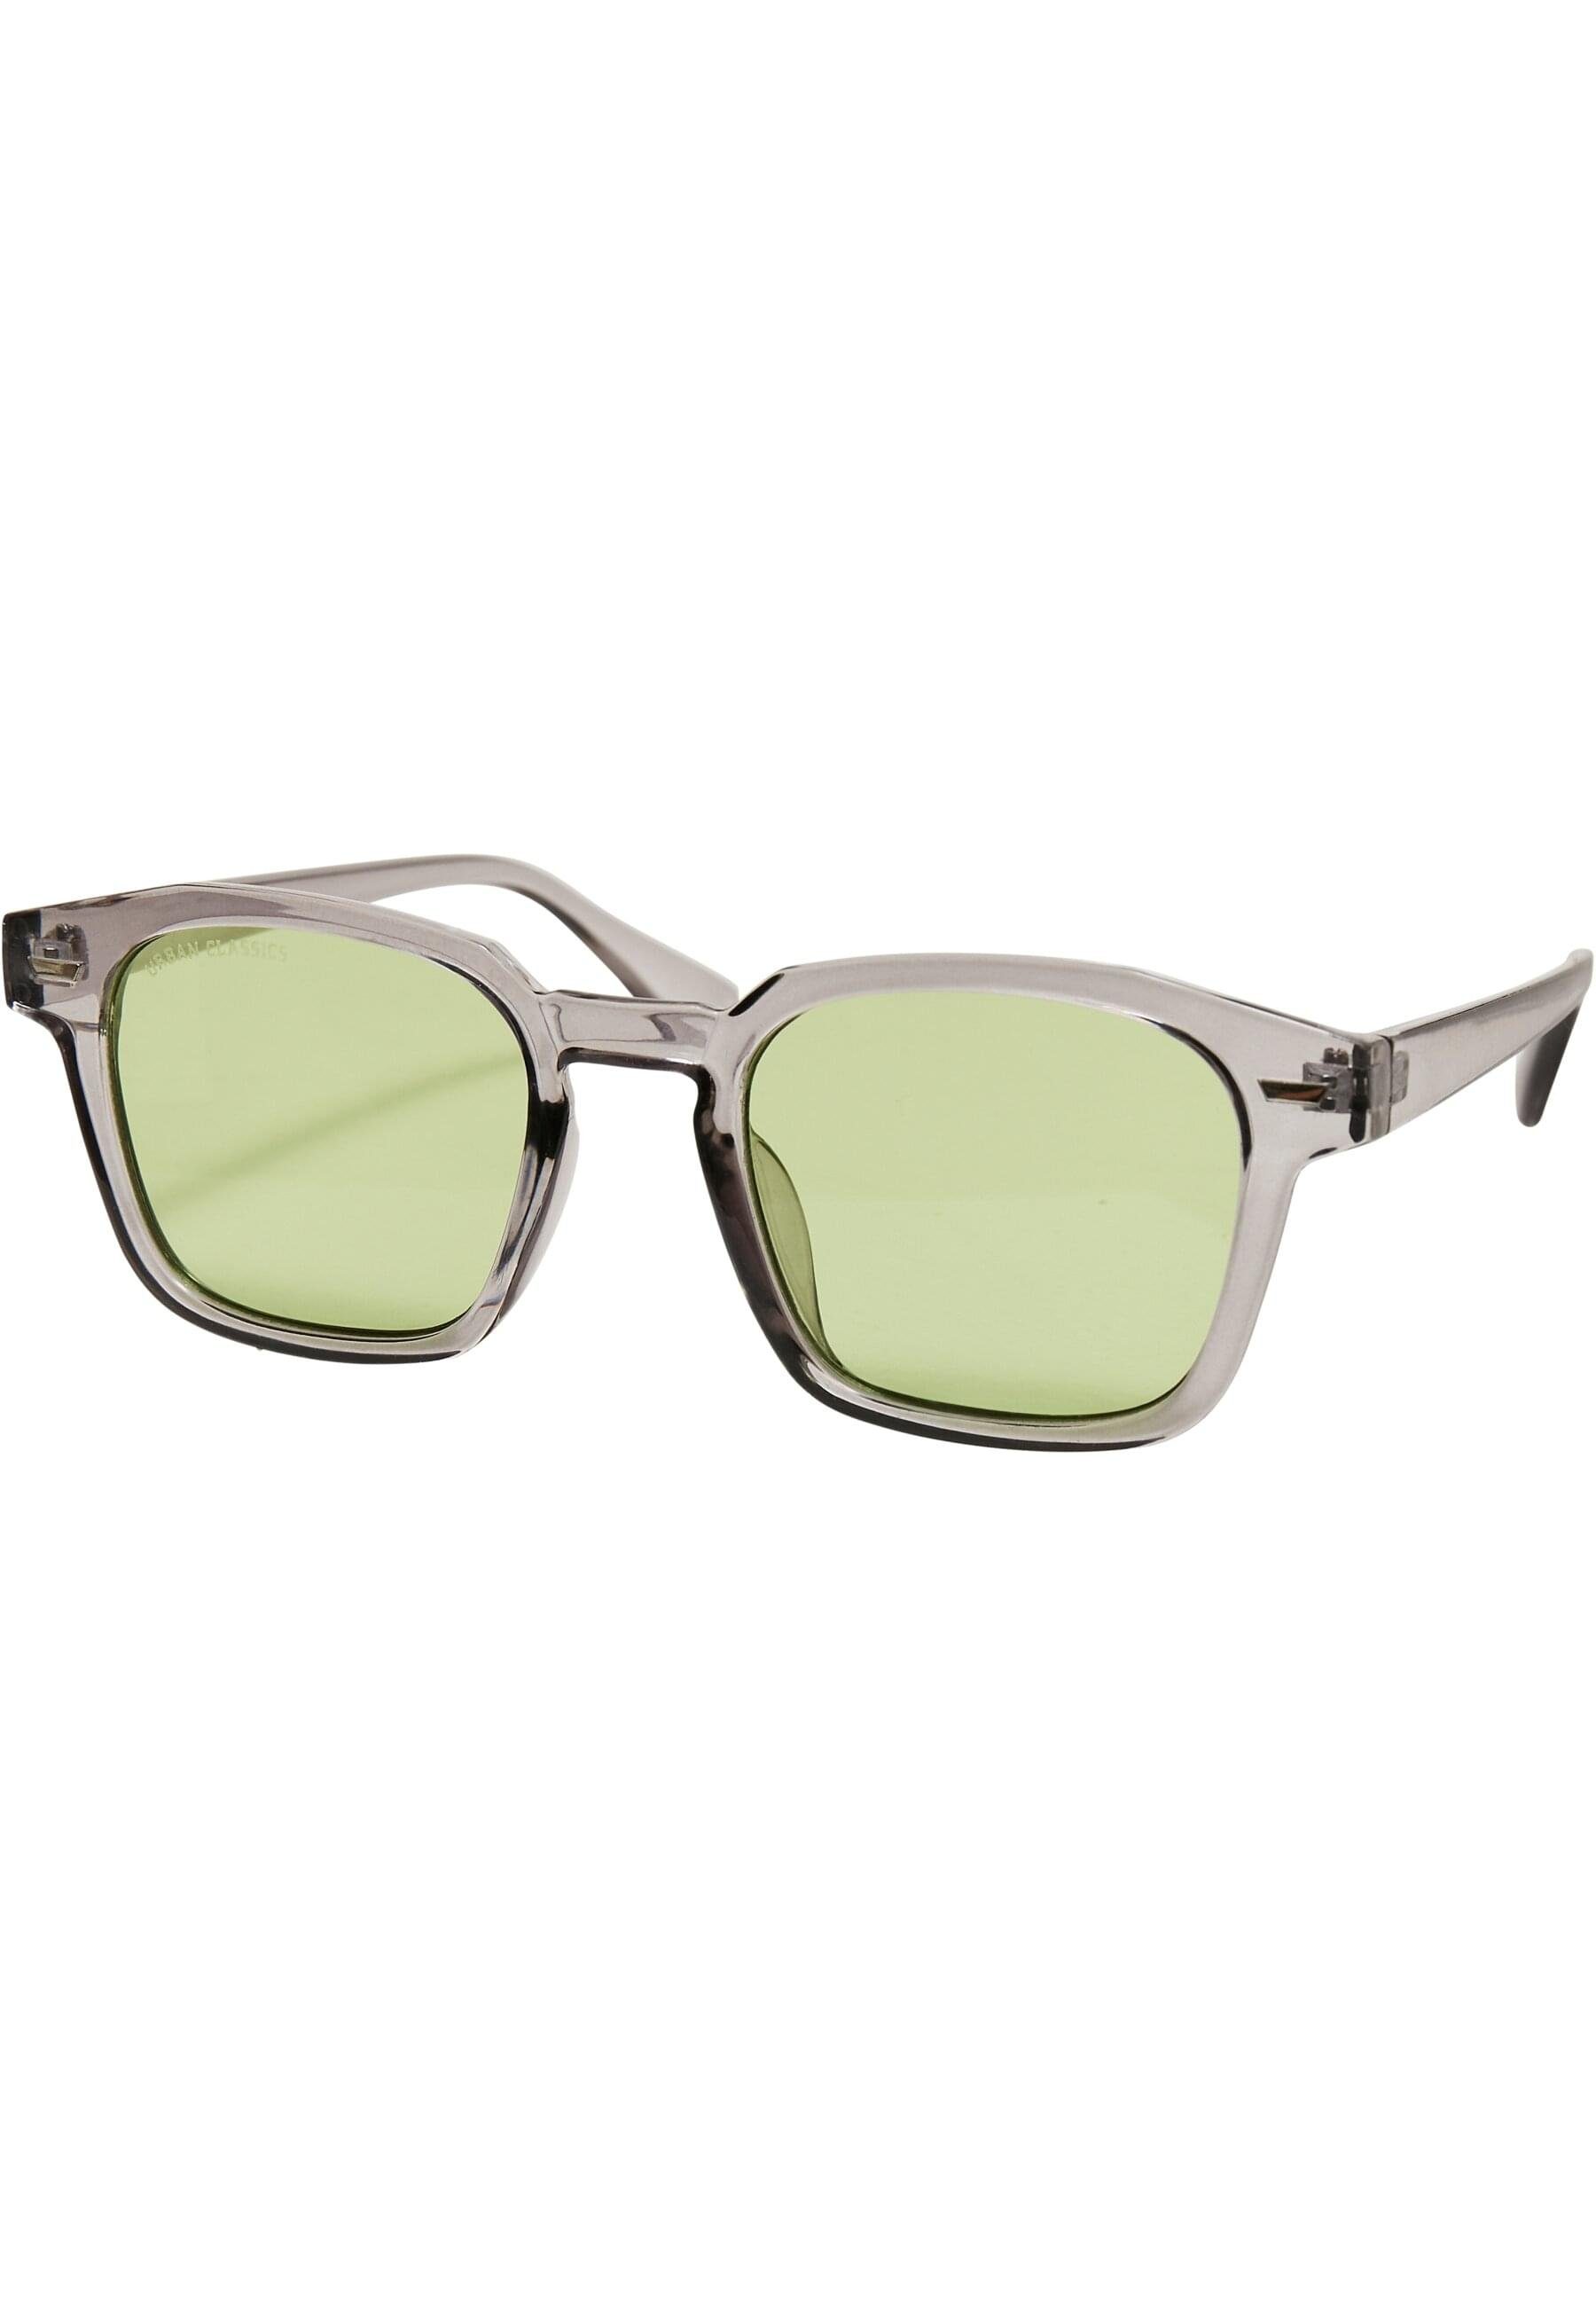 URBAN CLASSICS Sonnenbrille Unisex Sunglasses Case With Maui grey/yellow